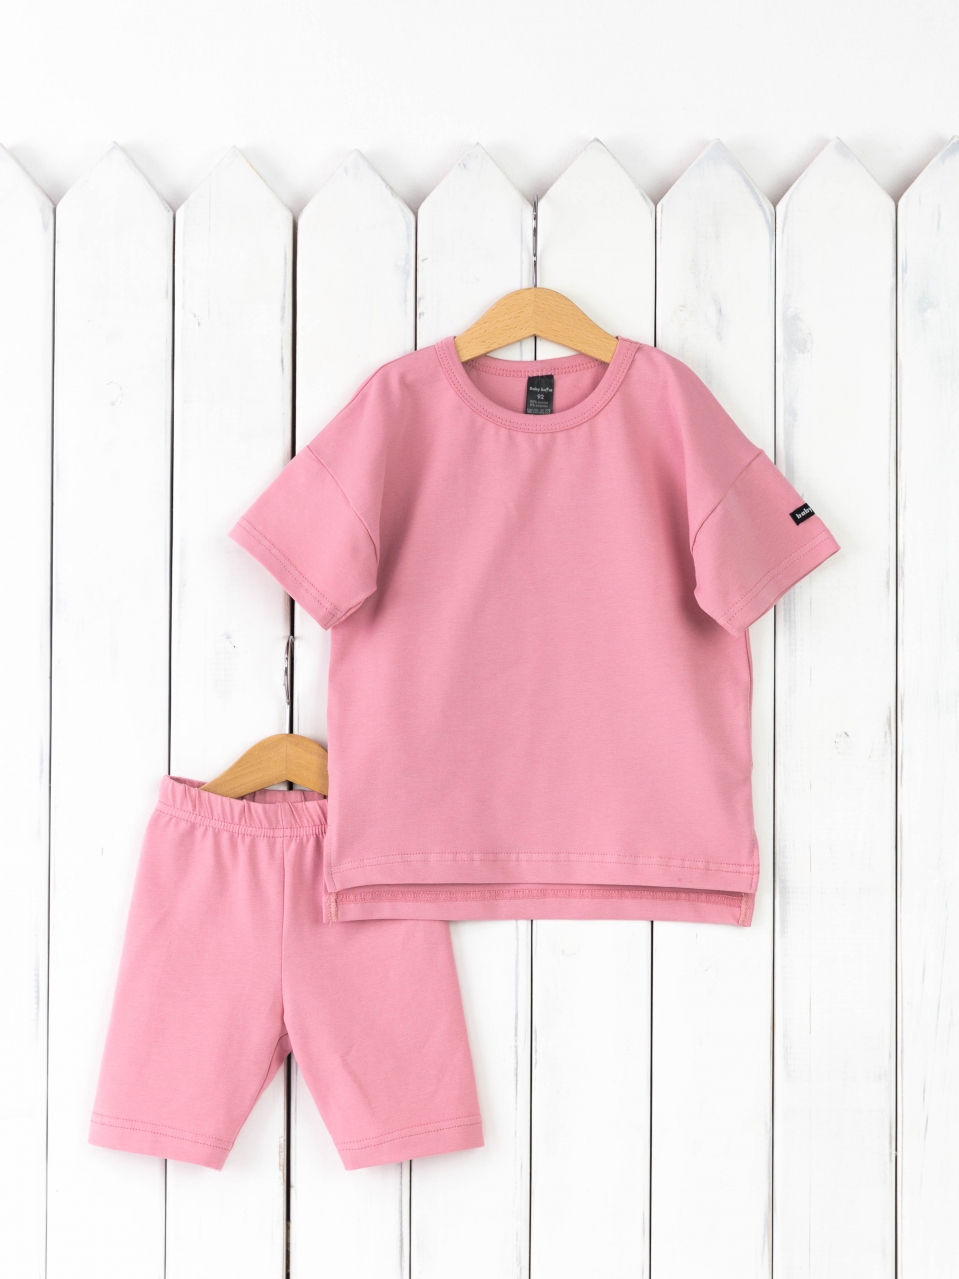 КД416/9-К Комплект детский р.122 футболка+легинсы/розовый зефир Бэби Бум - Оренбург 